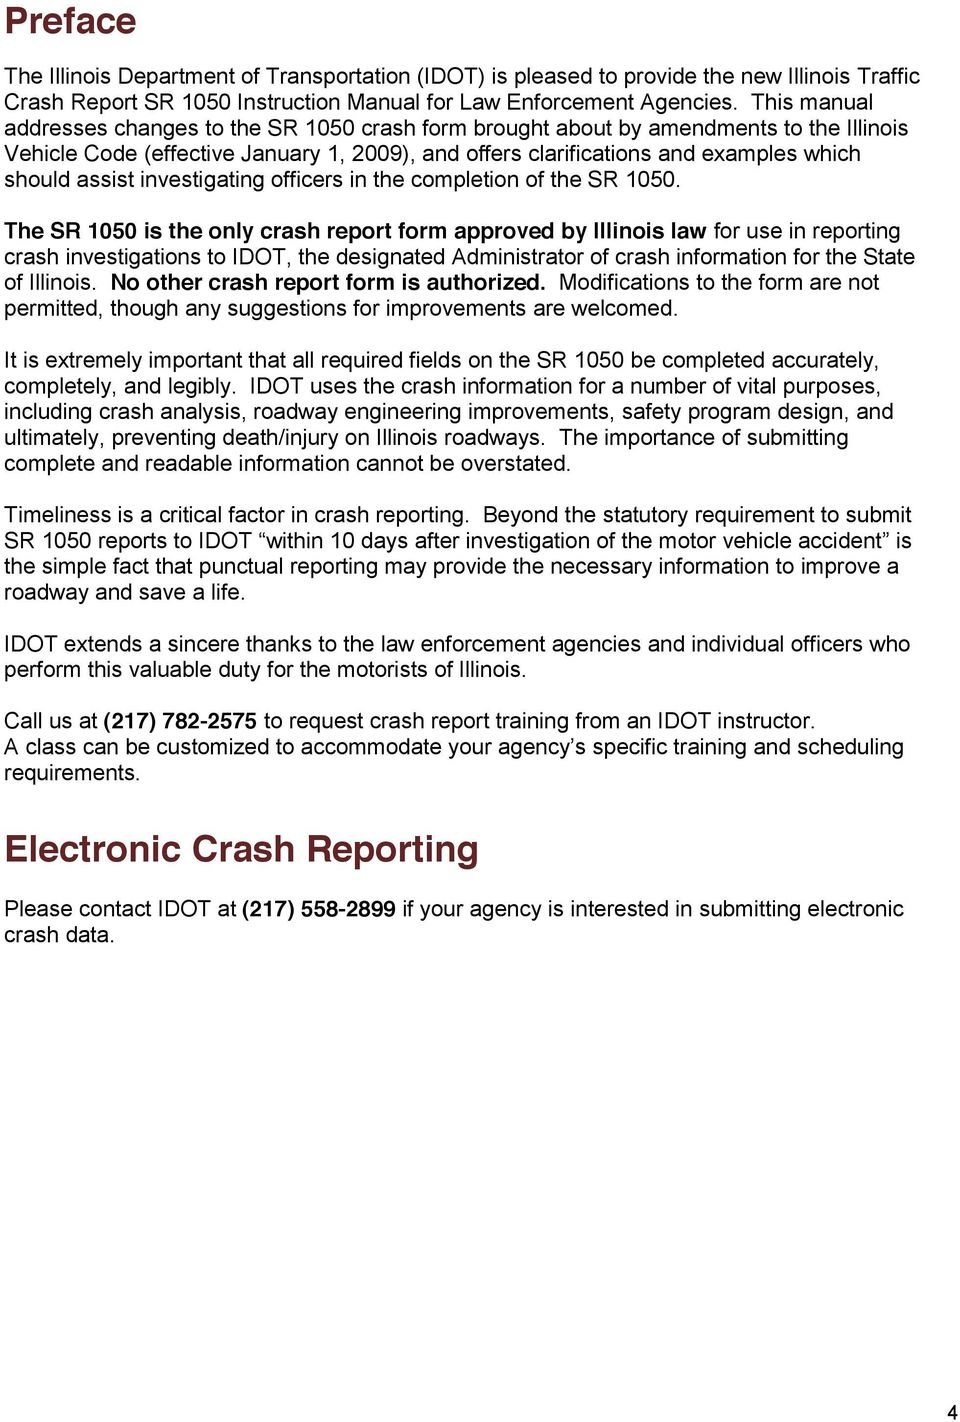 Illinois Traffic Crash Report Sr Pdf Free Download